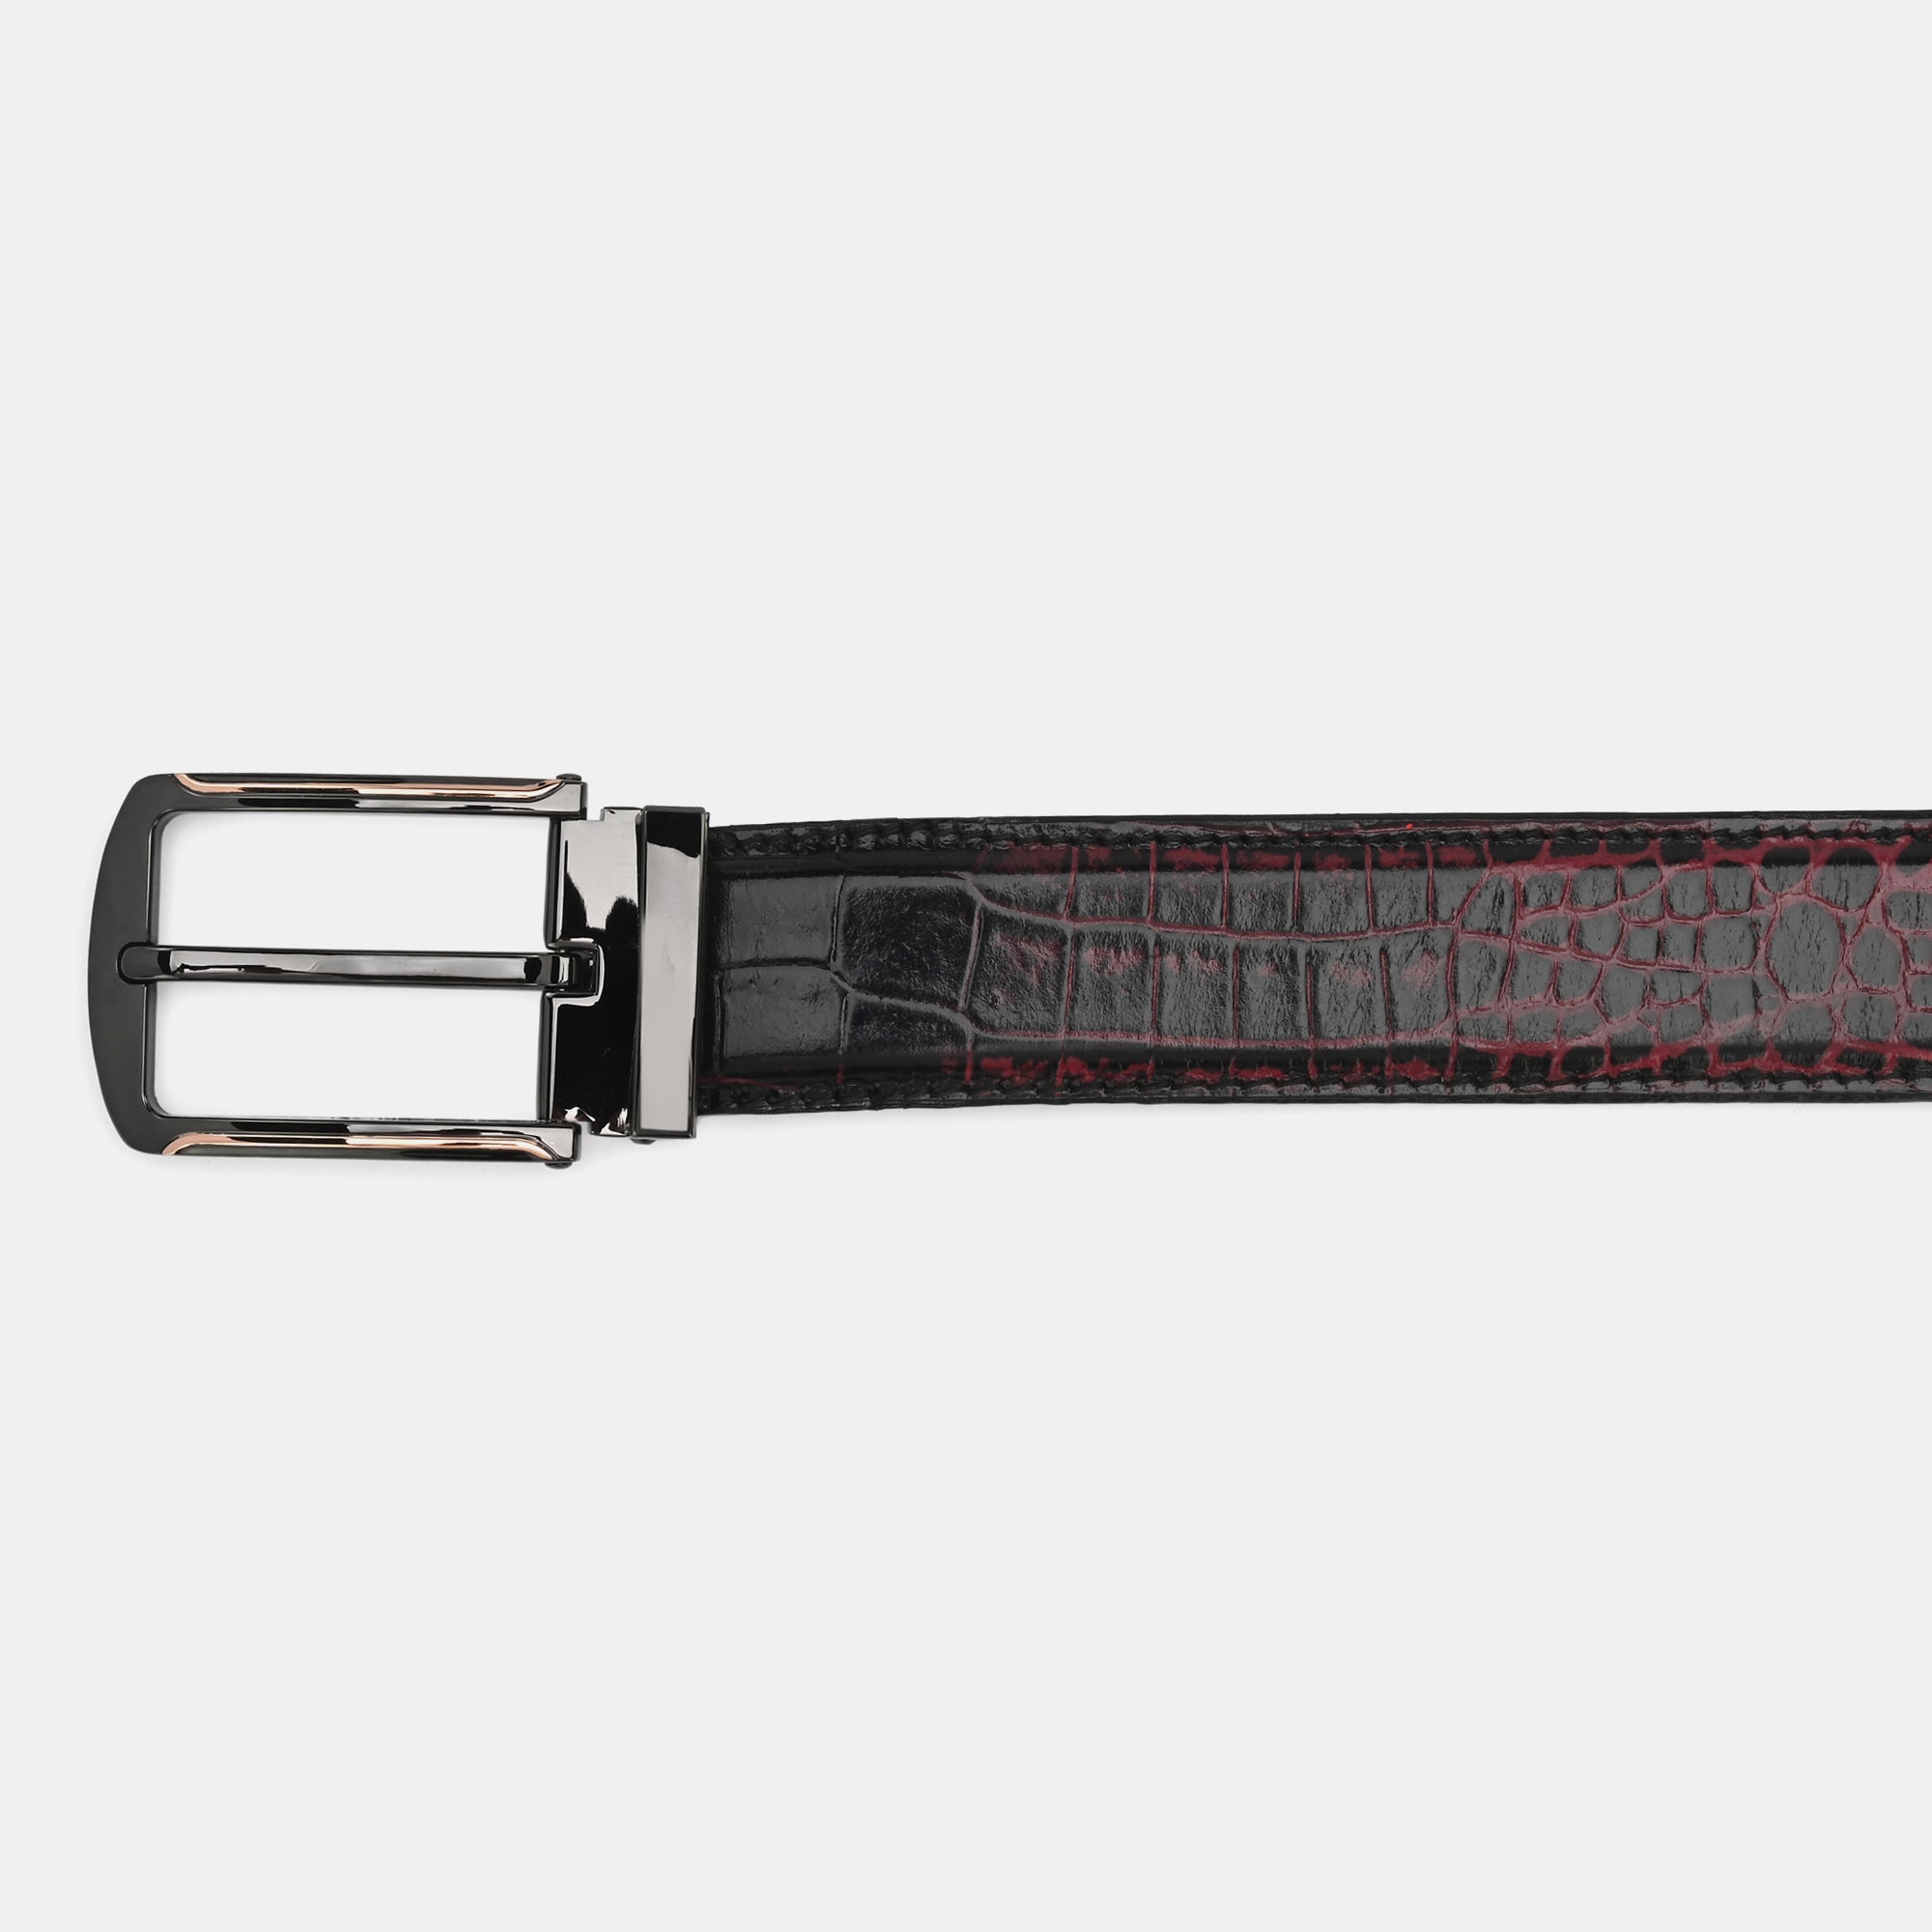 Vino Leather Belt